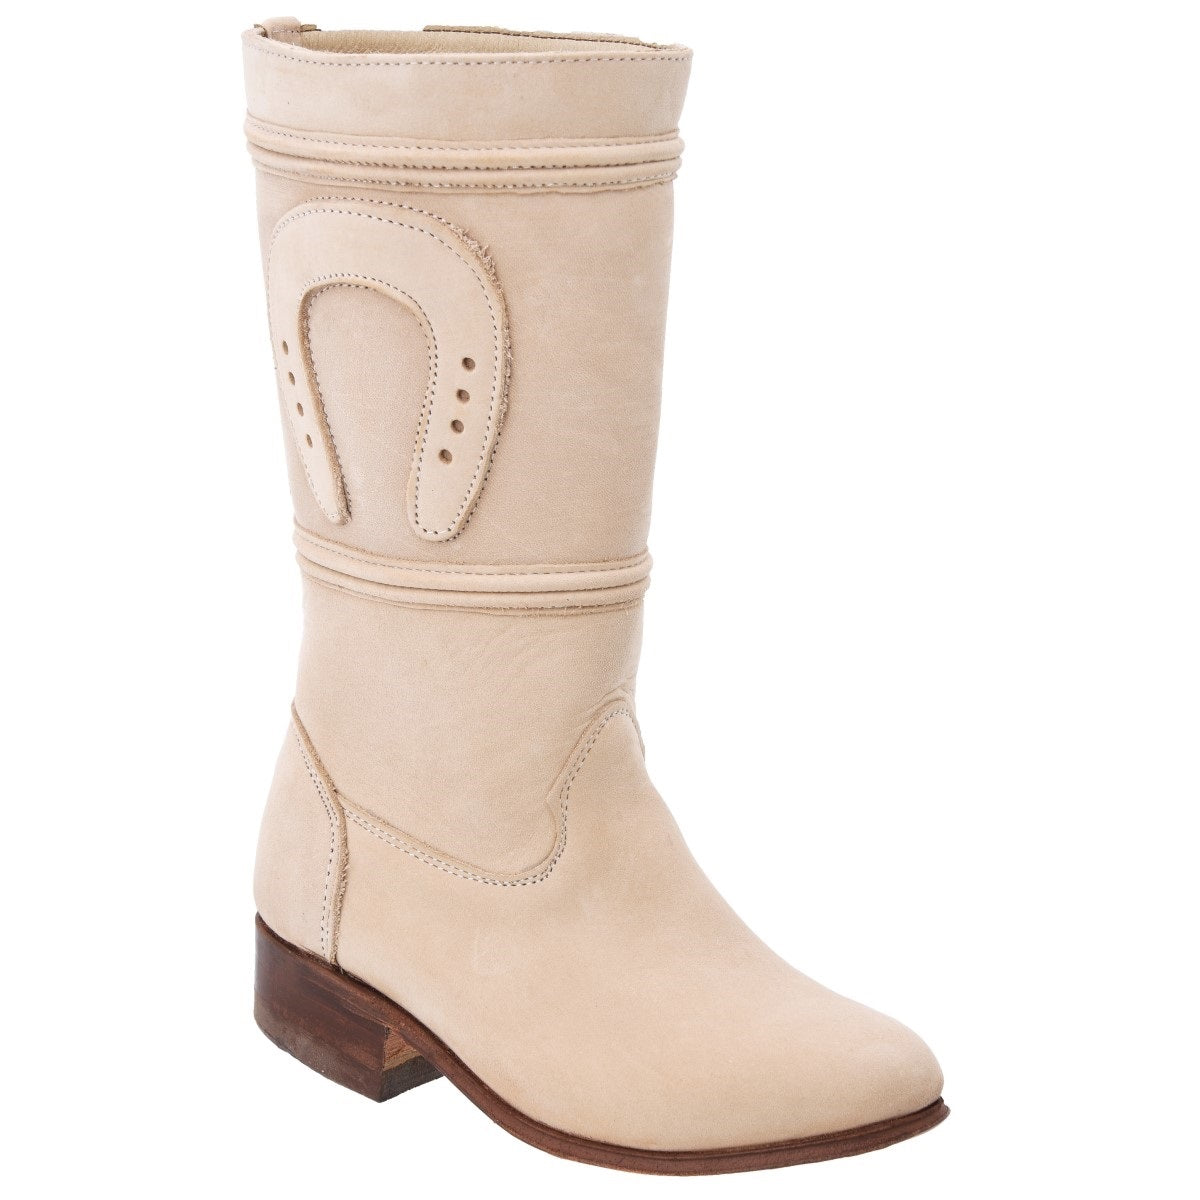 Botas vaqueras para ninas TM-WD0431 - Girls Western Boots